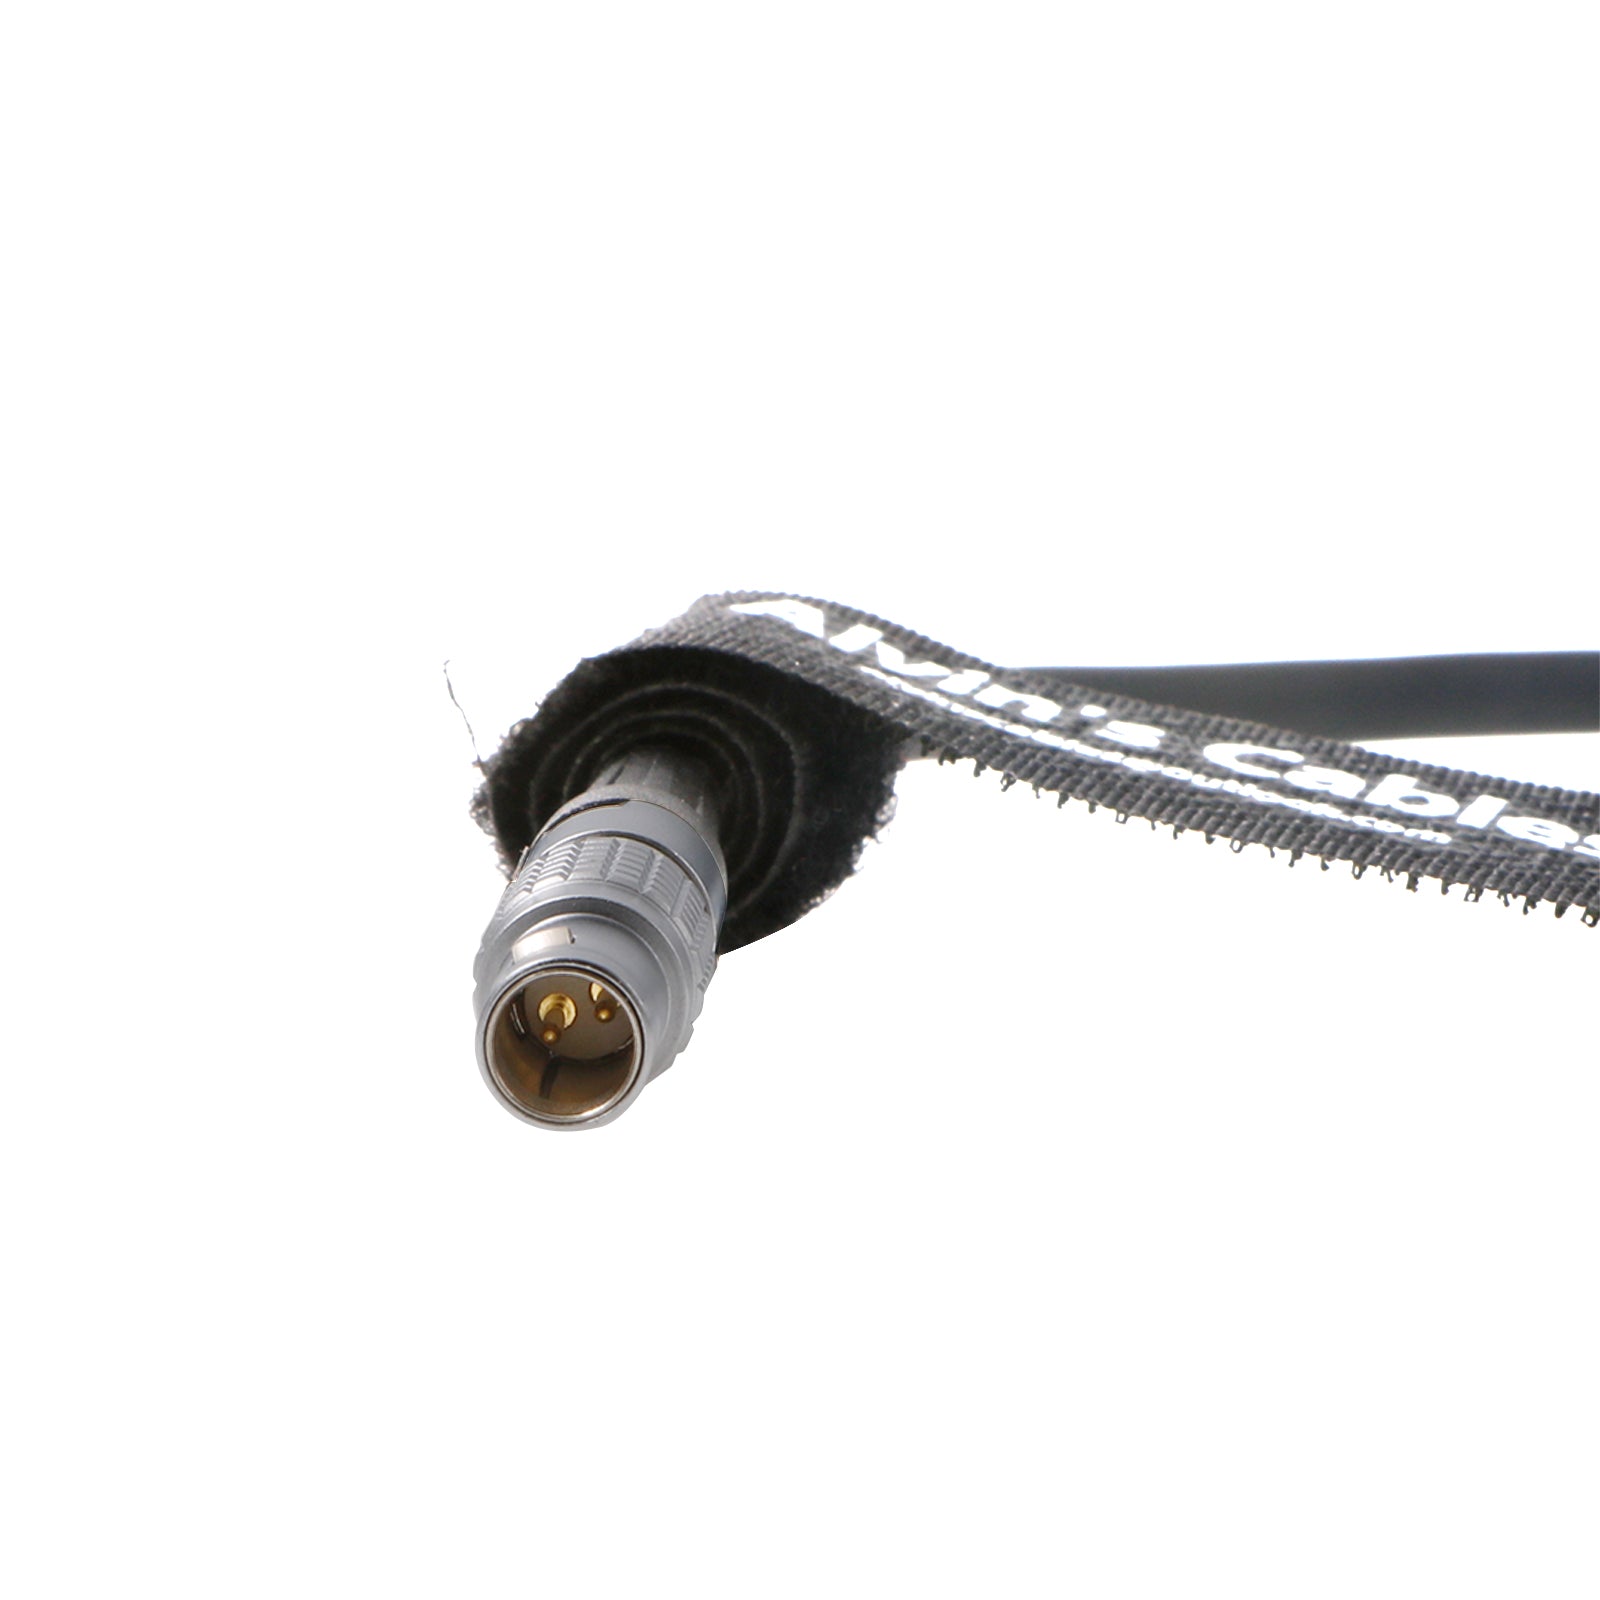 2-Pin Stromkabel für Teradek von Tiltamax-T6-Stabilisator 4-Pin Male Alvin's Cables 50cm|12inches